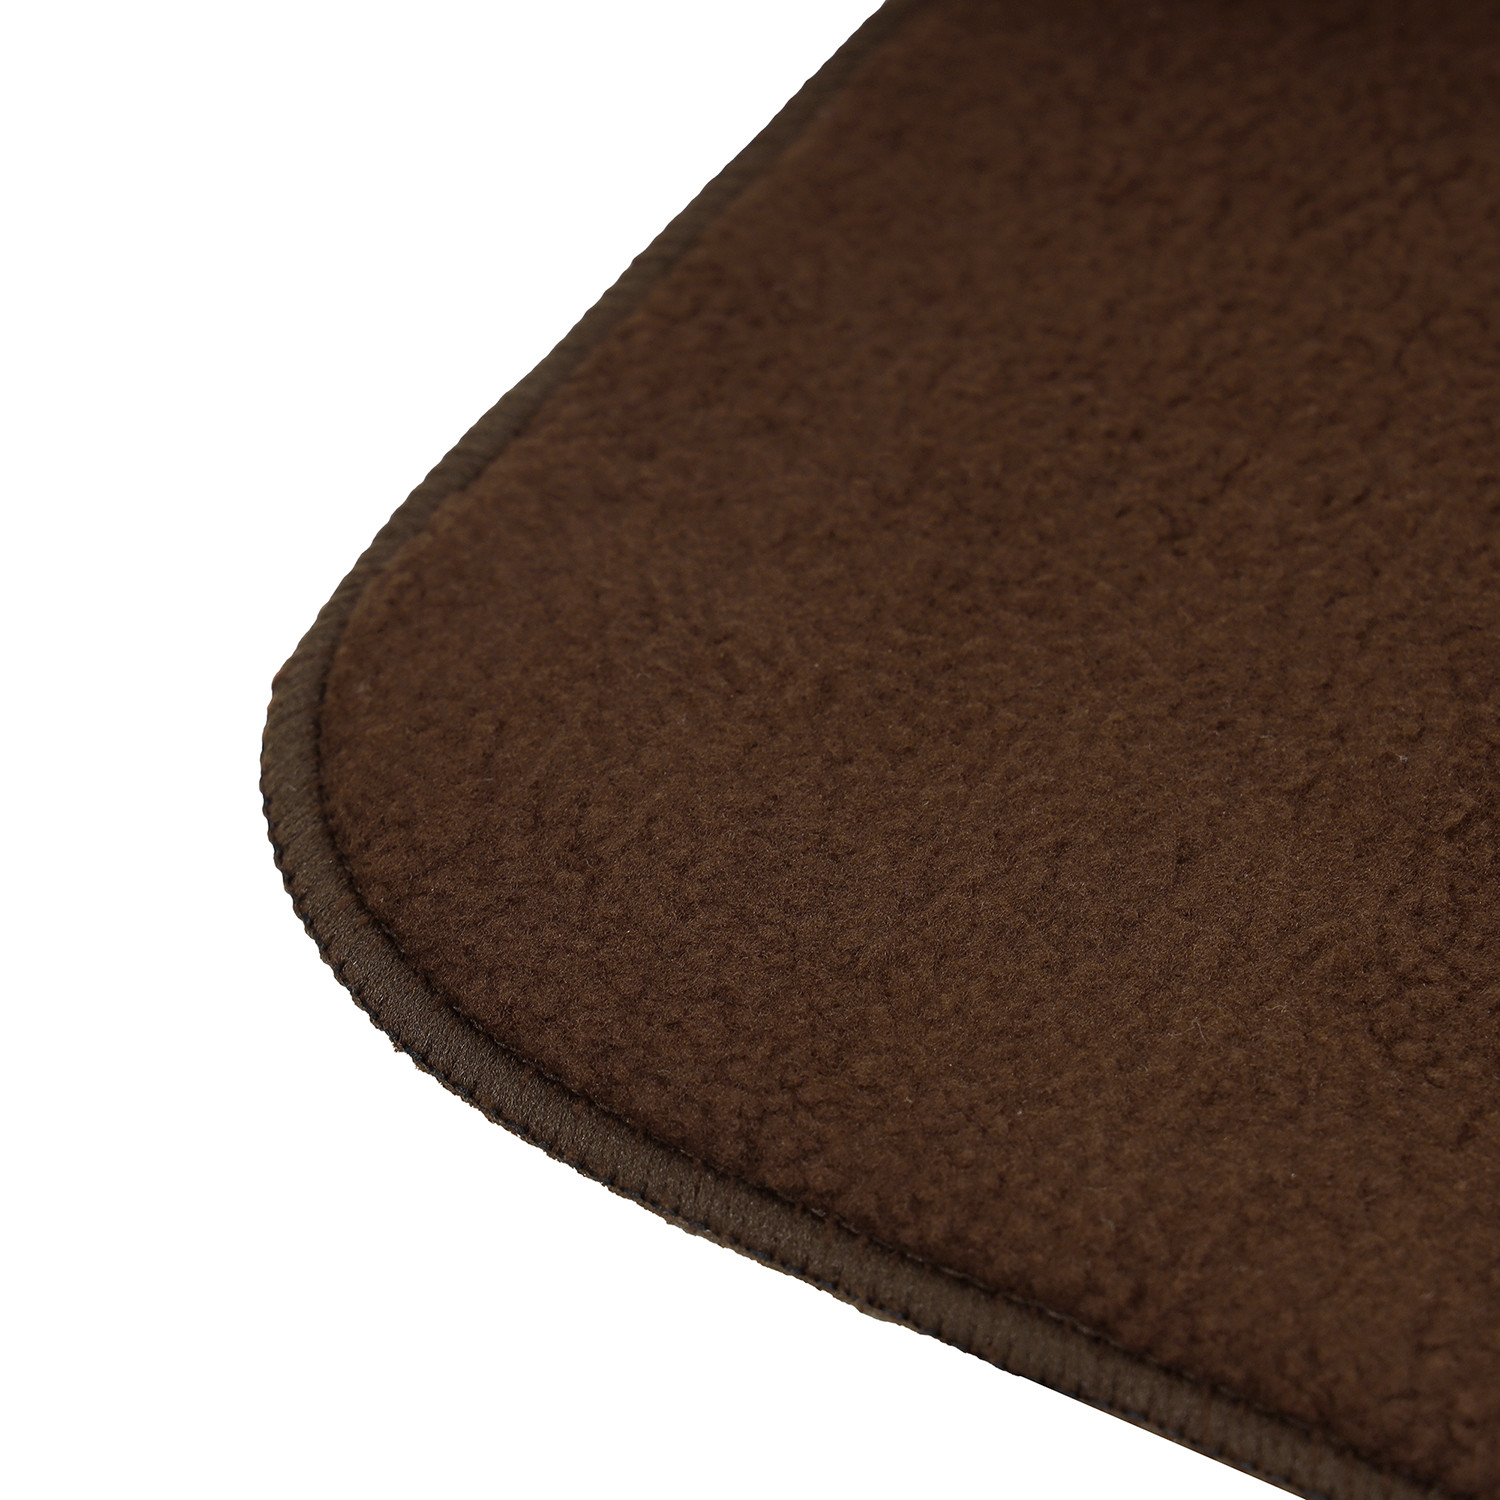 Kuber Industries Dish Dry Mat | Microfiber Drying Mat | Reversible Kitchen Drying Mat | Absorbent Mat | Kitchen Dish Dry Mat | 38x50 | Pack of 2 | Light Purple & Brown